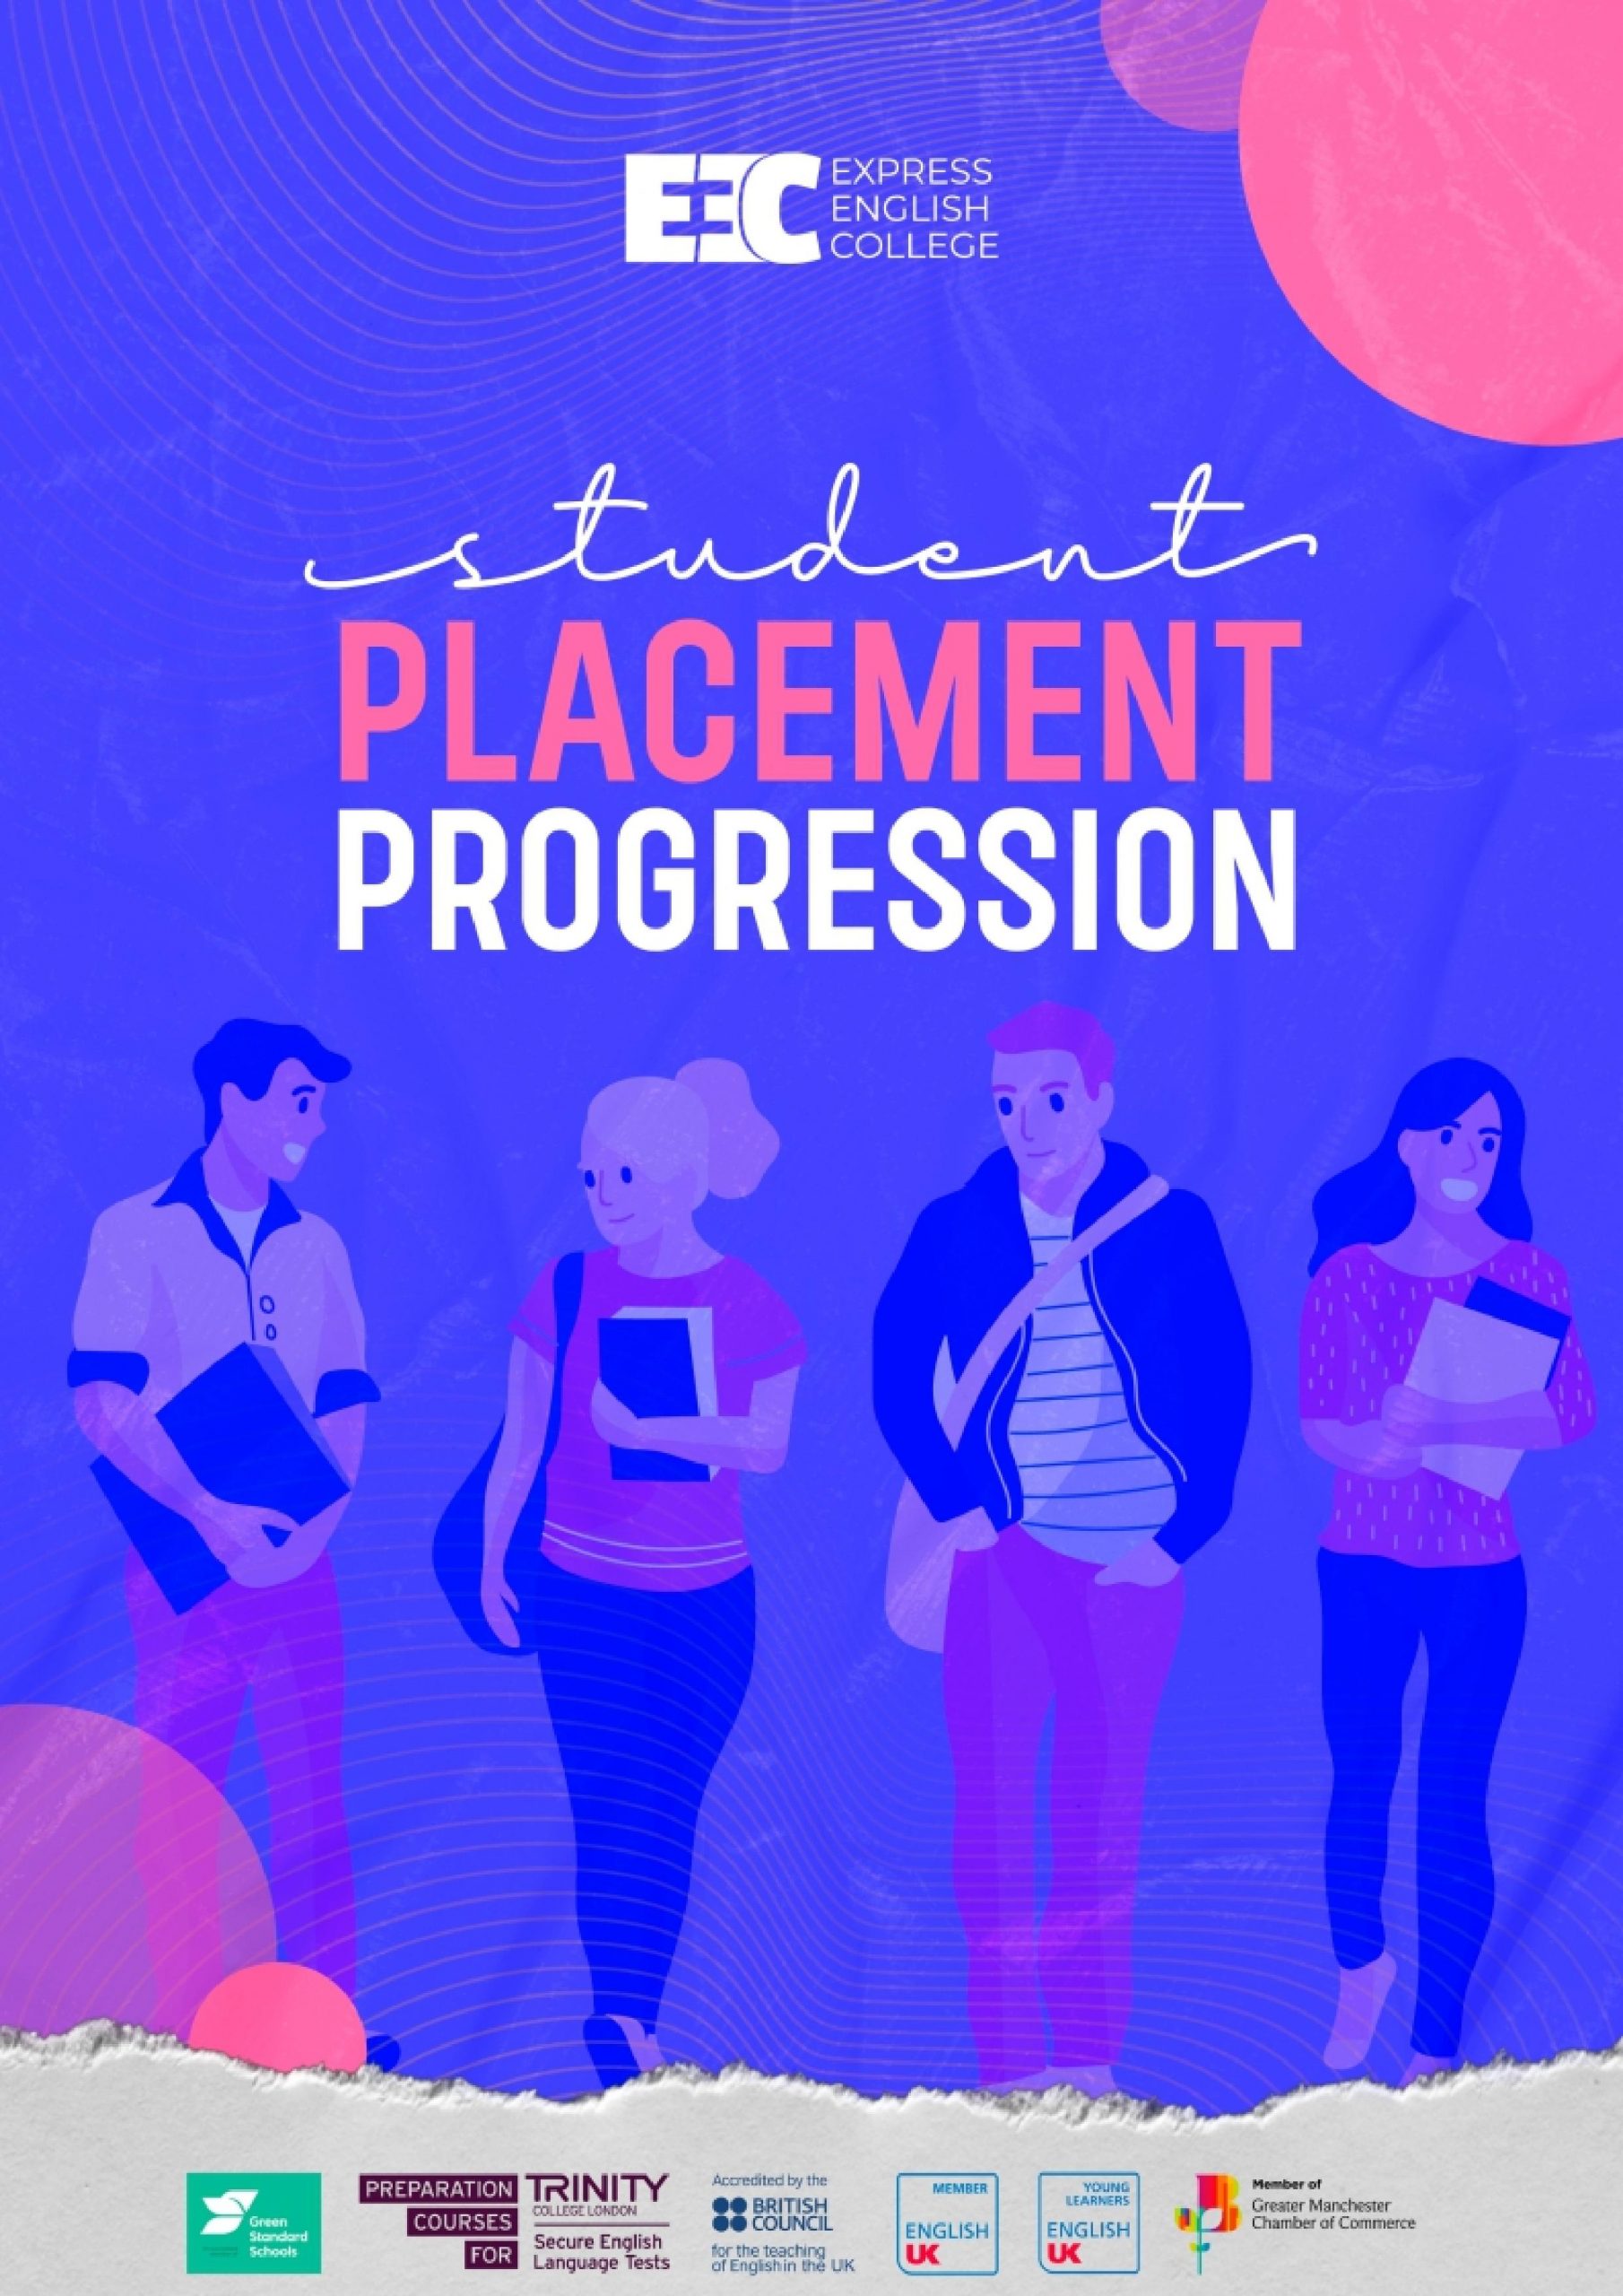 Student Placement Progression